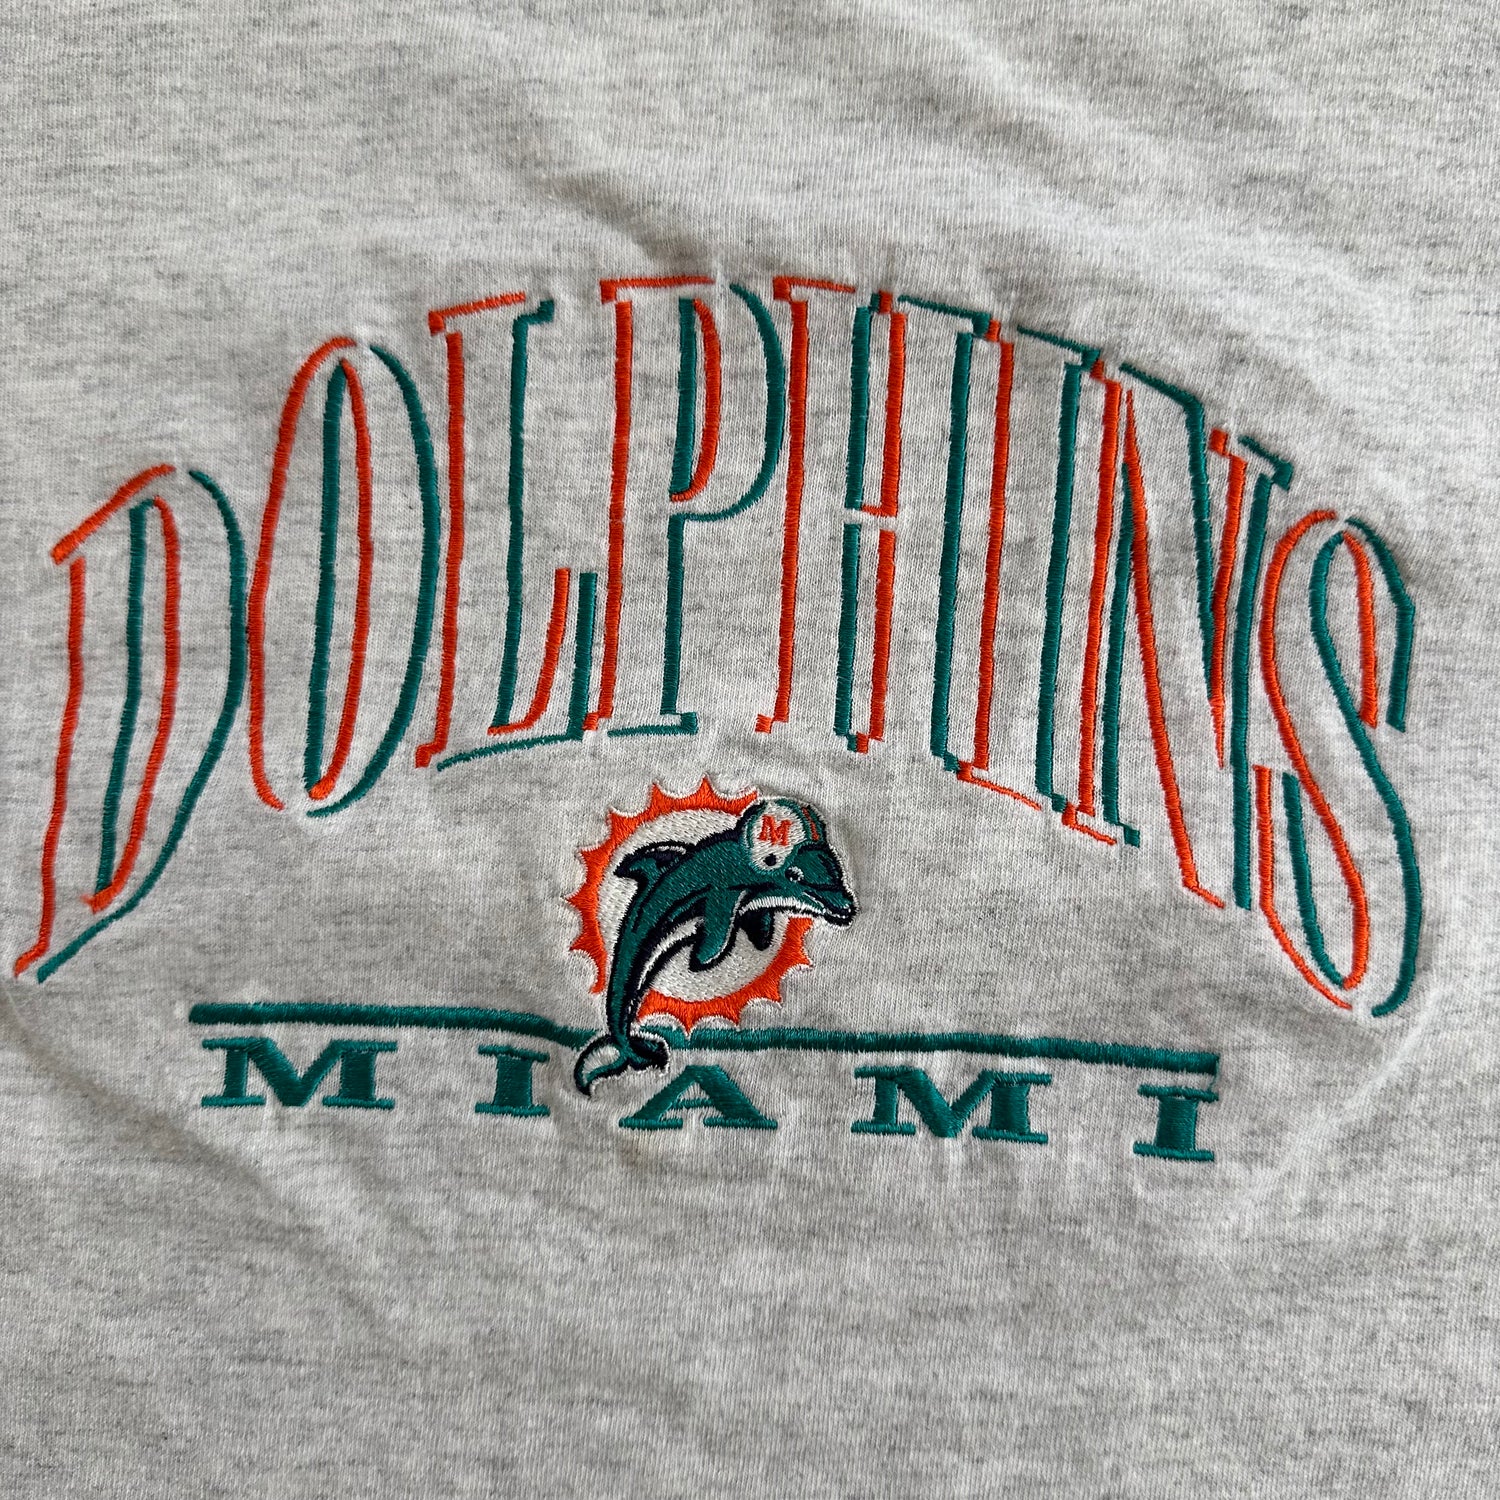 Vintage 1990s Miami Dolphins T-shirt size XXL